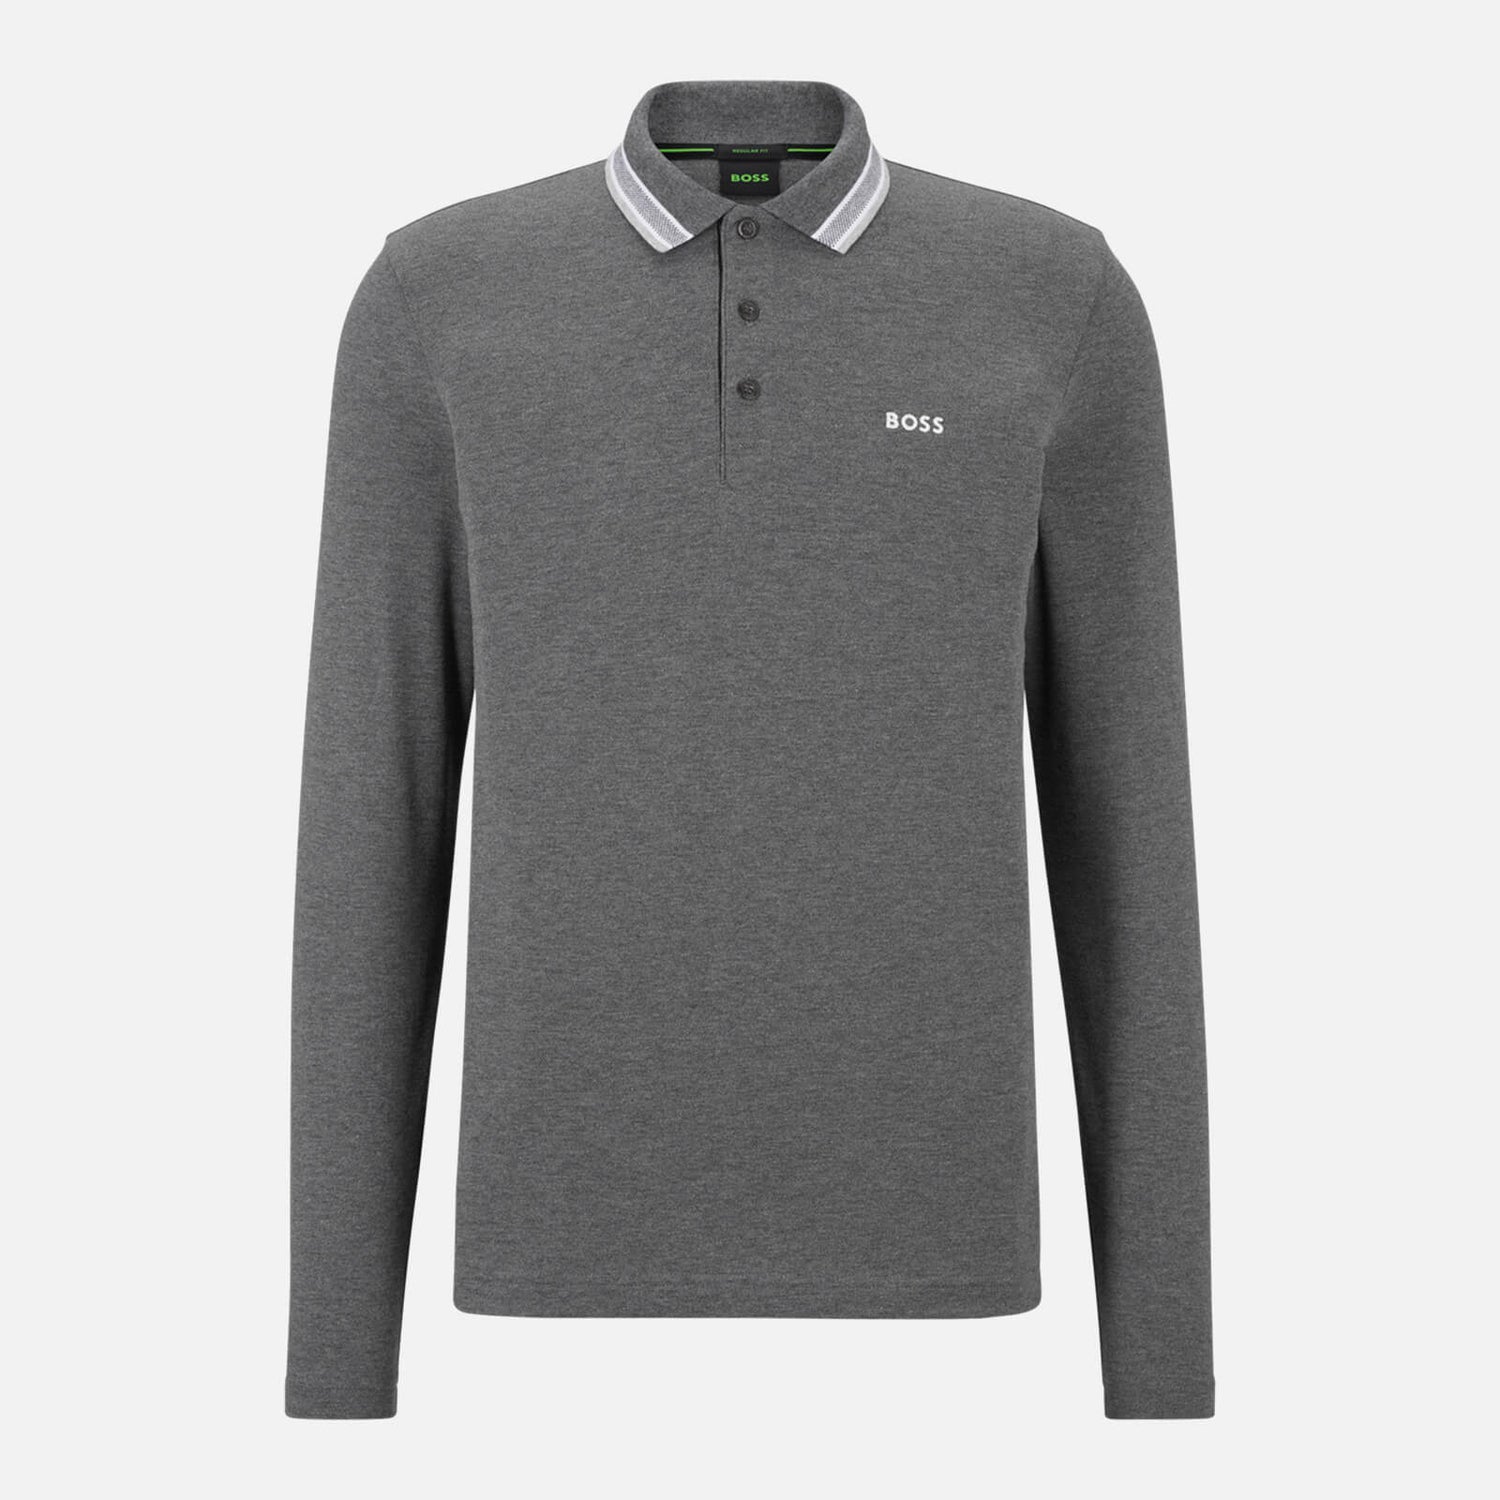 Hugo Boss Plisy Logo Cotton Long Sleeve Polo Shirt - S